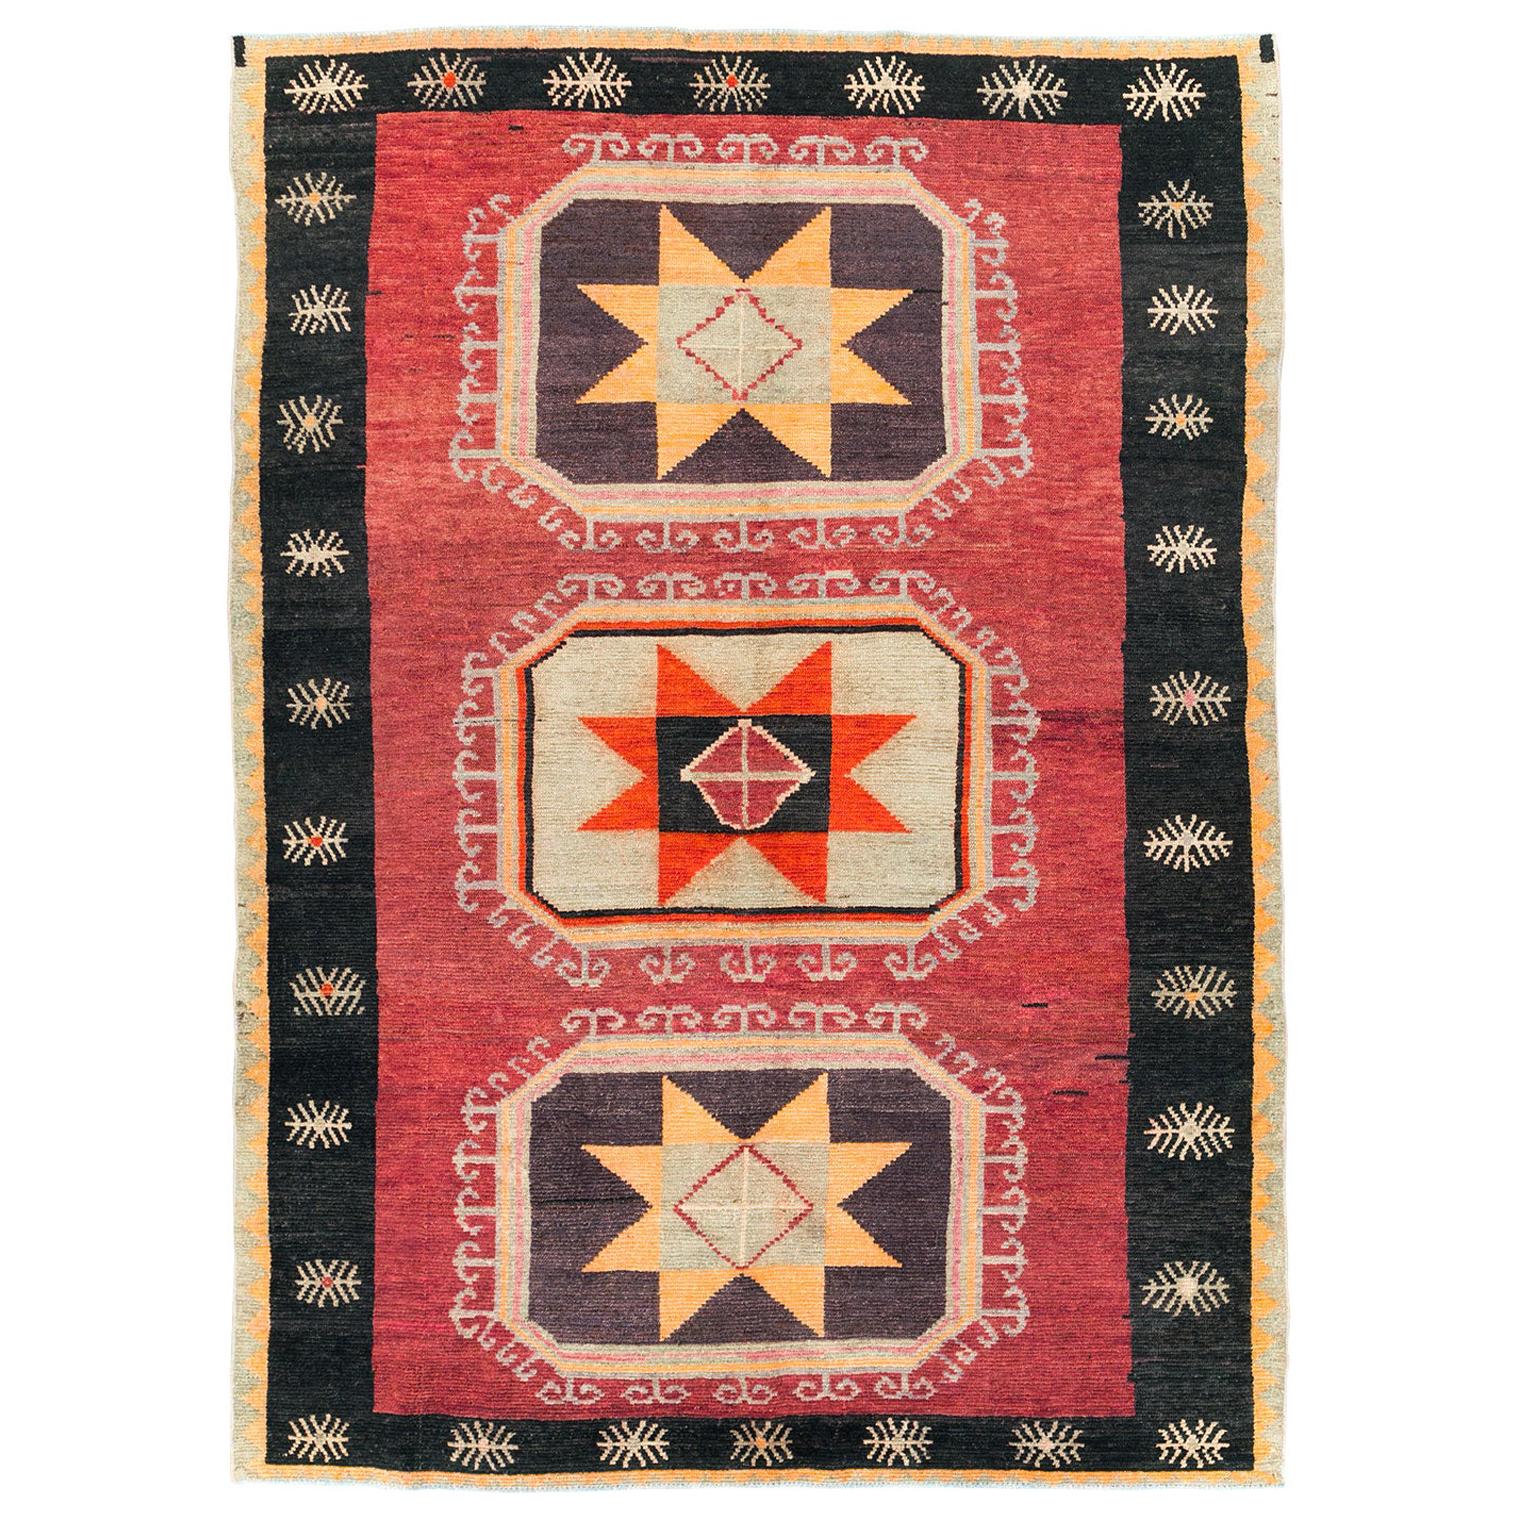 Tribal Mid-20th Century Handmade Turkish Anatolian Accent Carpet in Red & Black